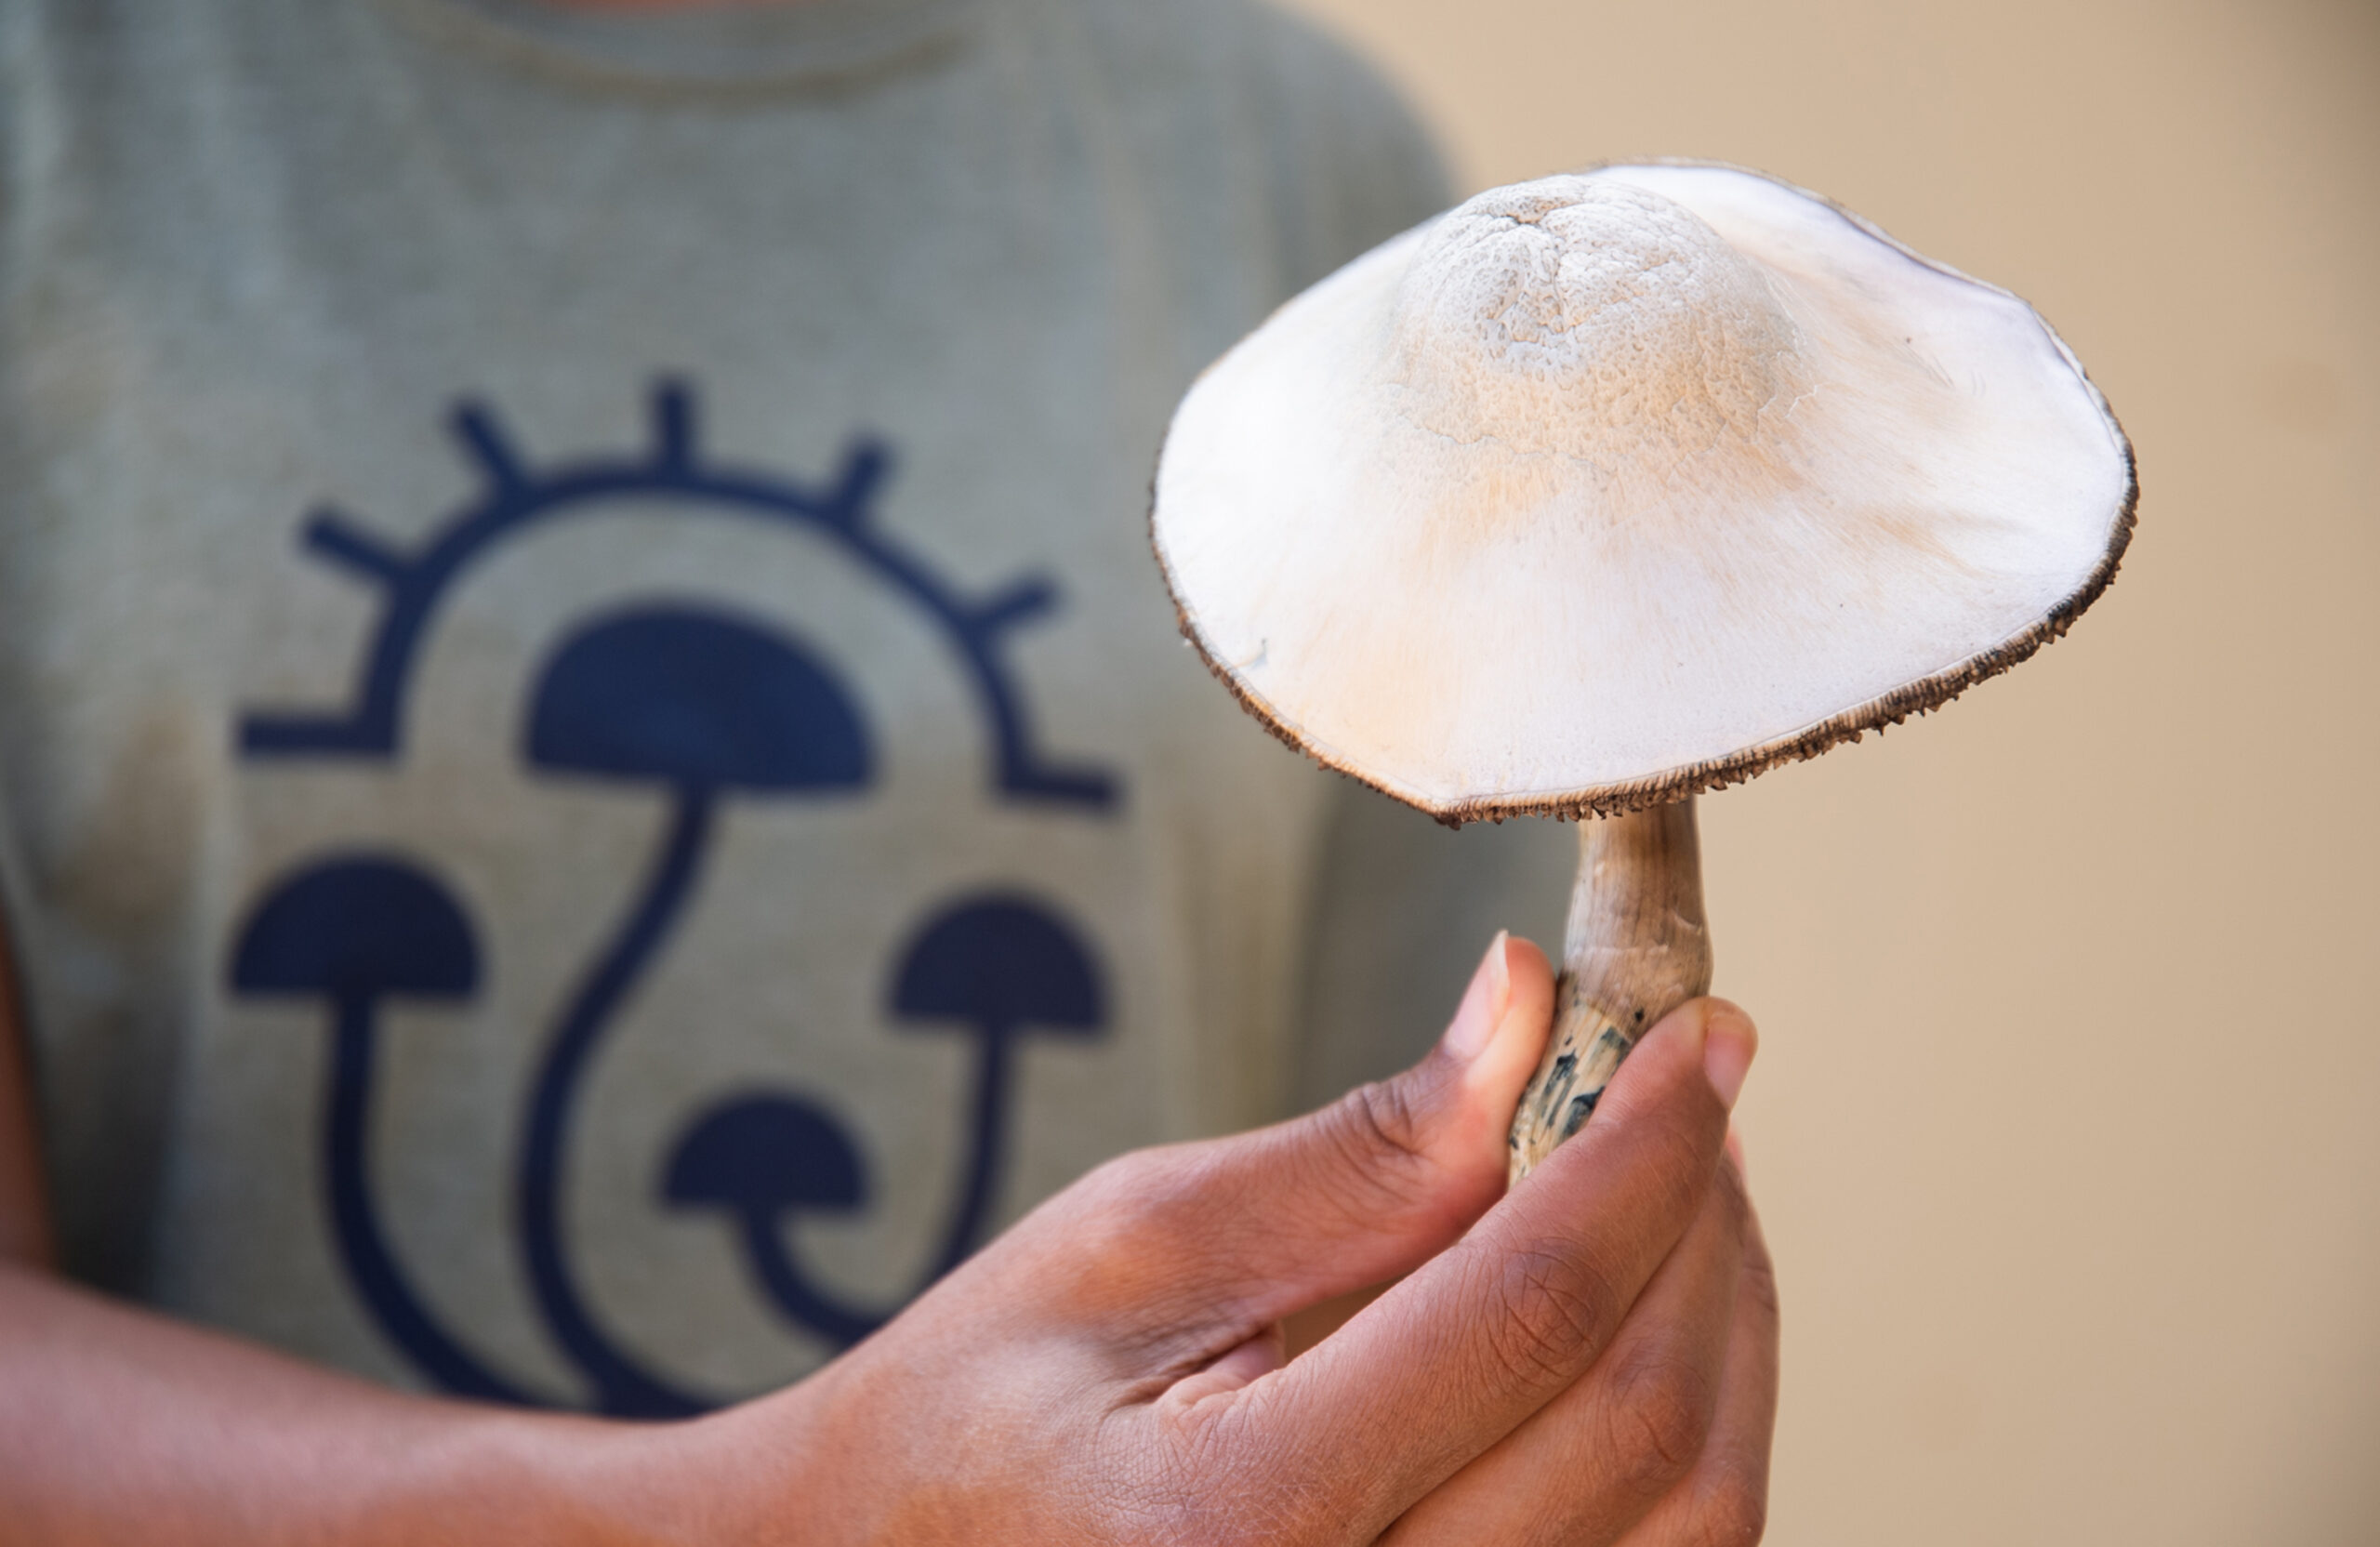 Psilocybin mushrooms used both in microdosing and macrodosing on psilocybin retreats